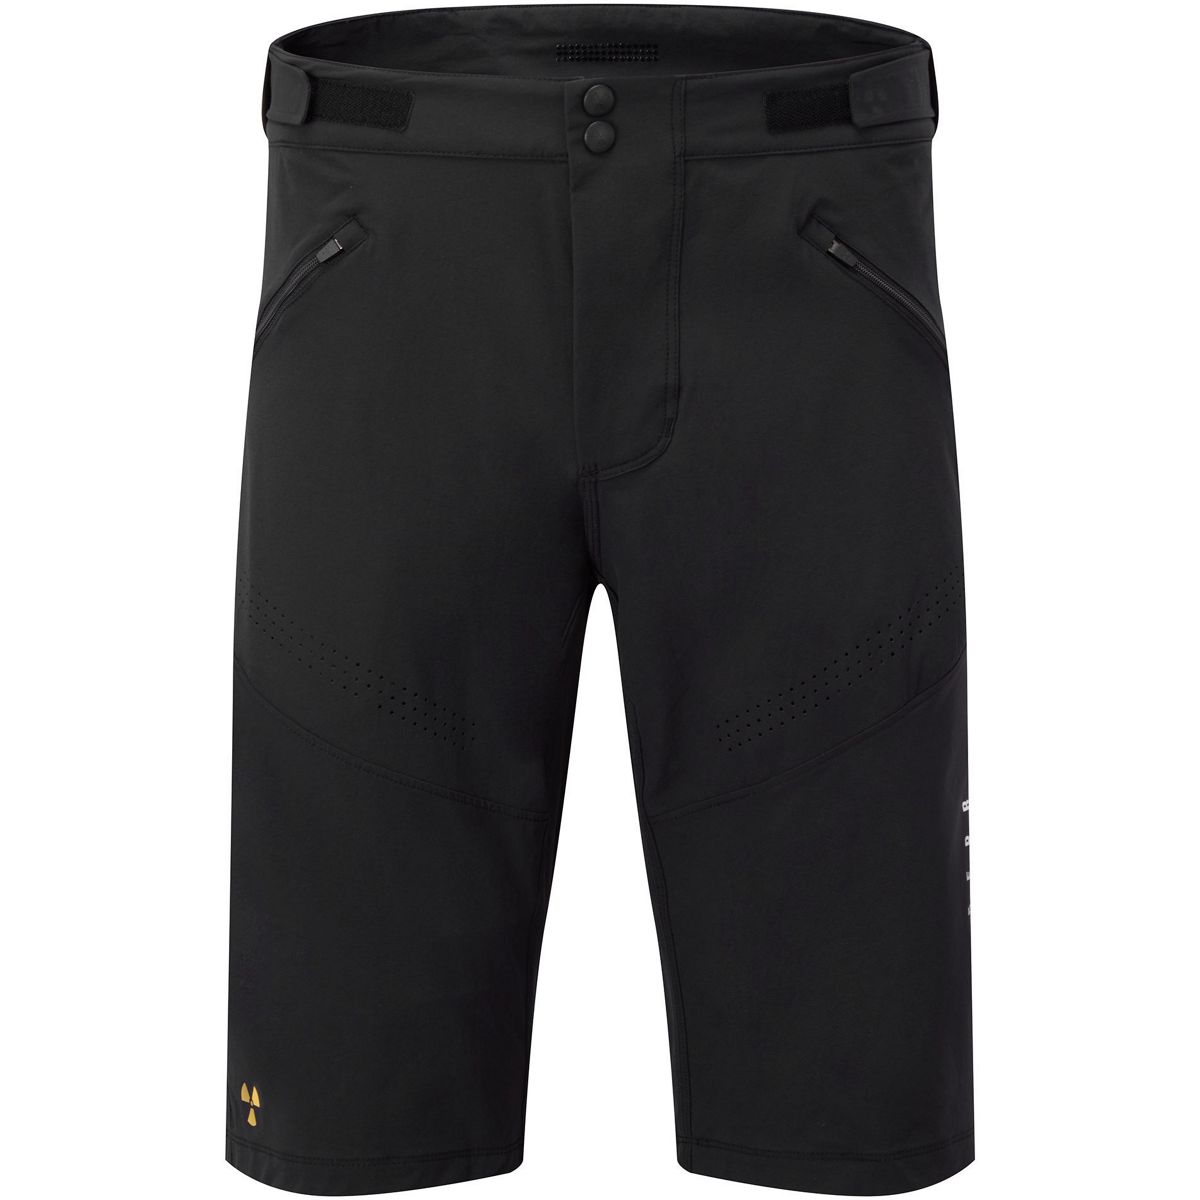 Blackline Shorts with Liner – Nukeproof Bikes